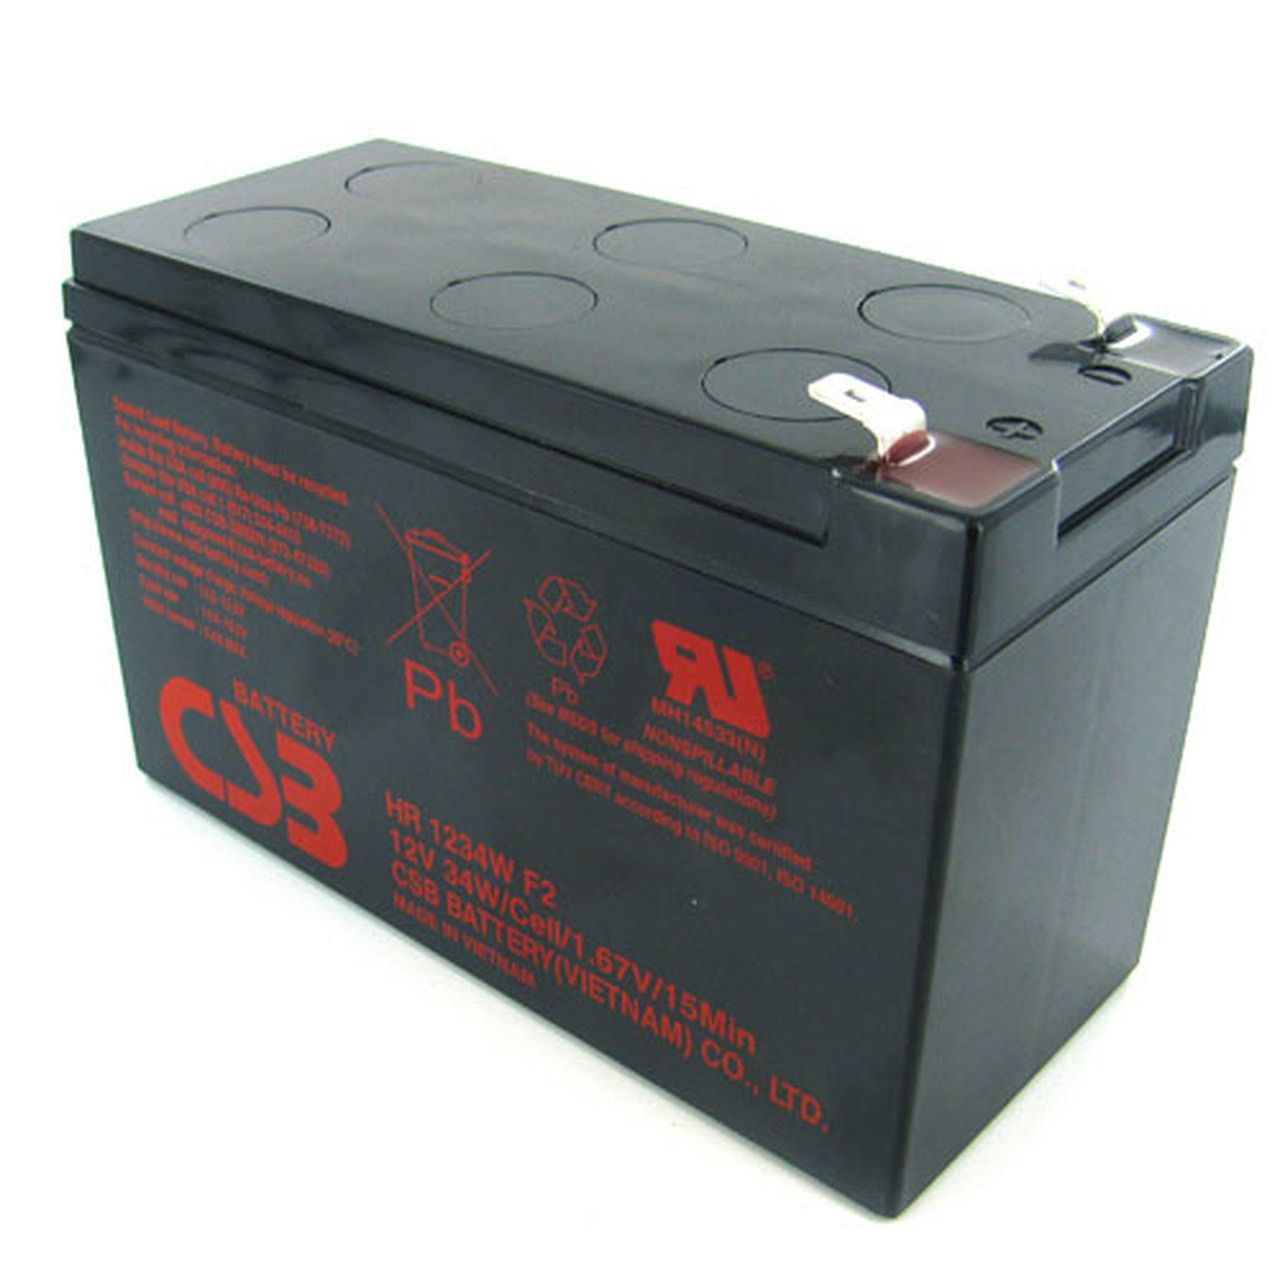 Baterie UPS CSB HR1234WF2, 12V 9Ah, 150.9 x 64.8 x 94.3 mm, Borne F2, Durata medie 3-5 ani, VRLA 